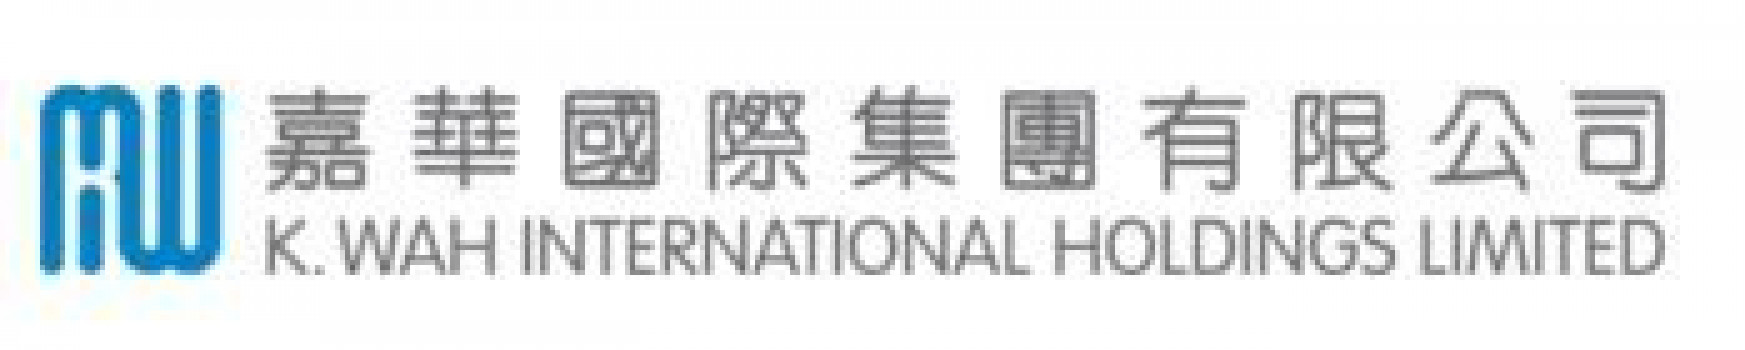 K. Wah International Holdings Limited